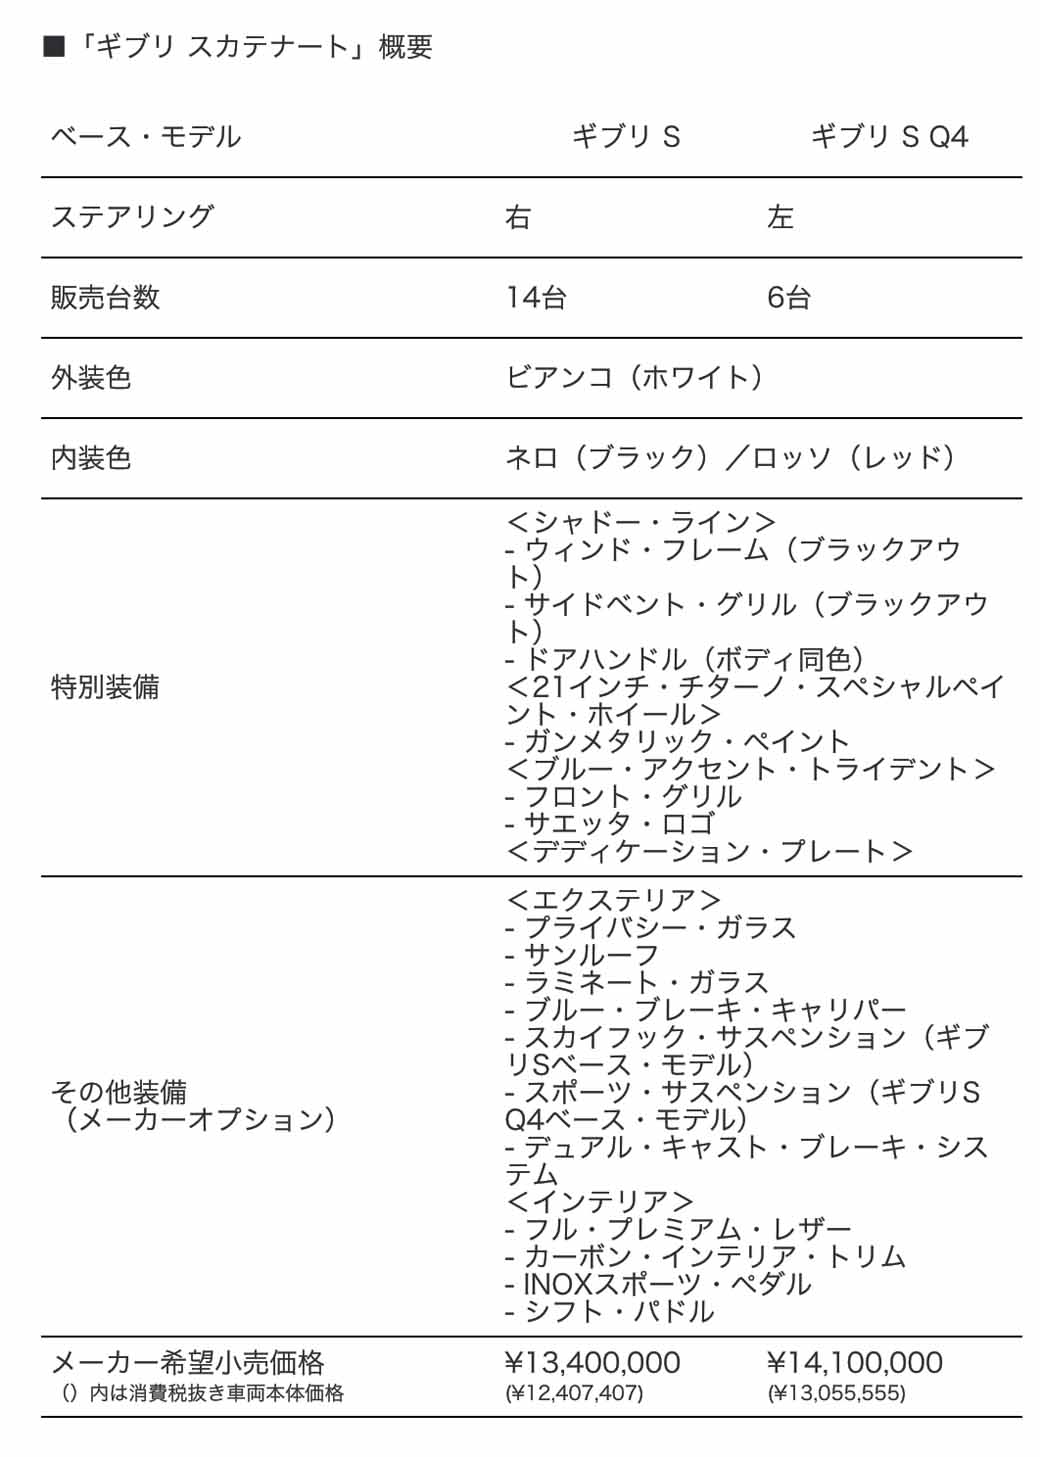 maserati-japan-japan-special-limited-car-maserati-ghibli-sukatenato-sale20151118-10